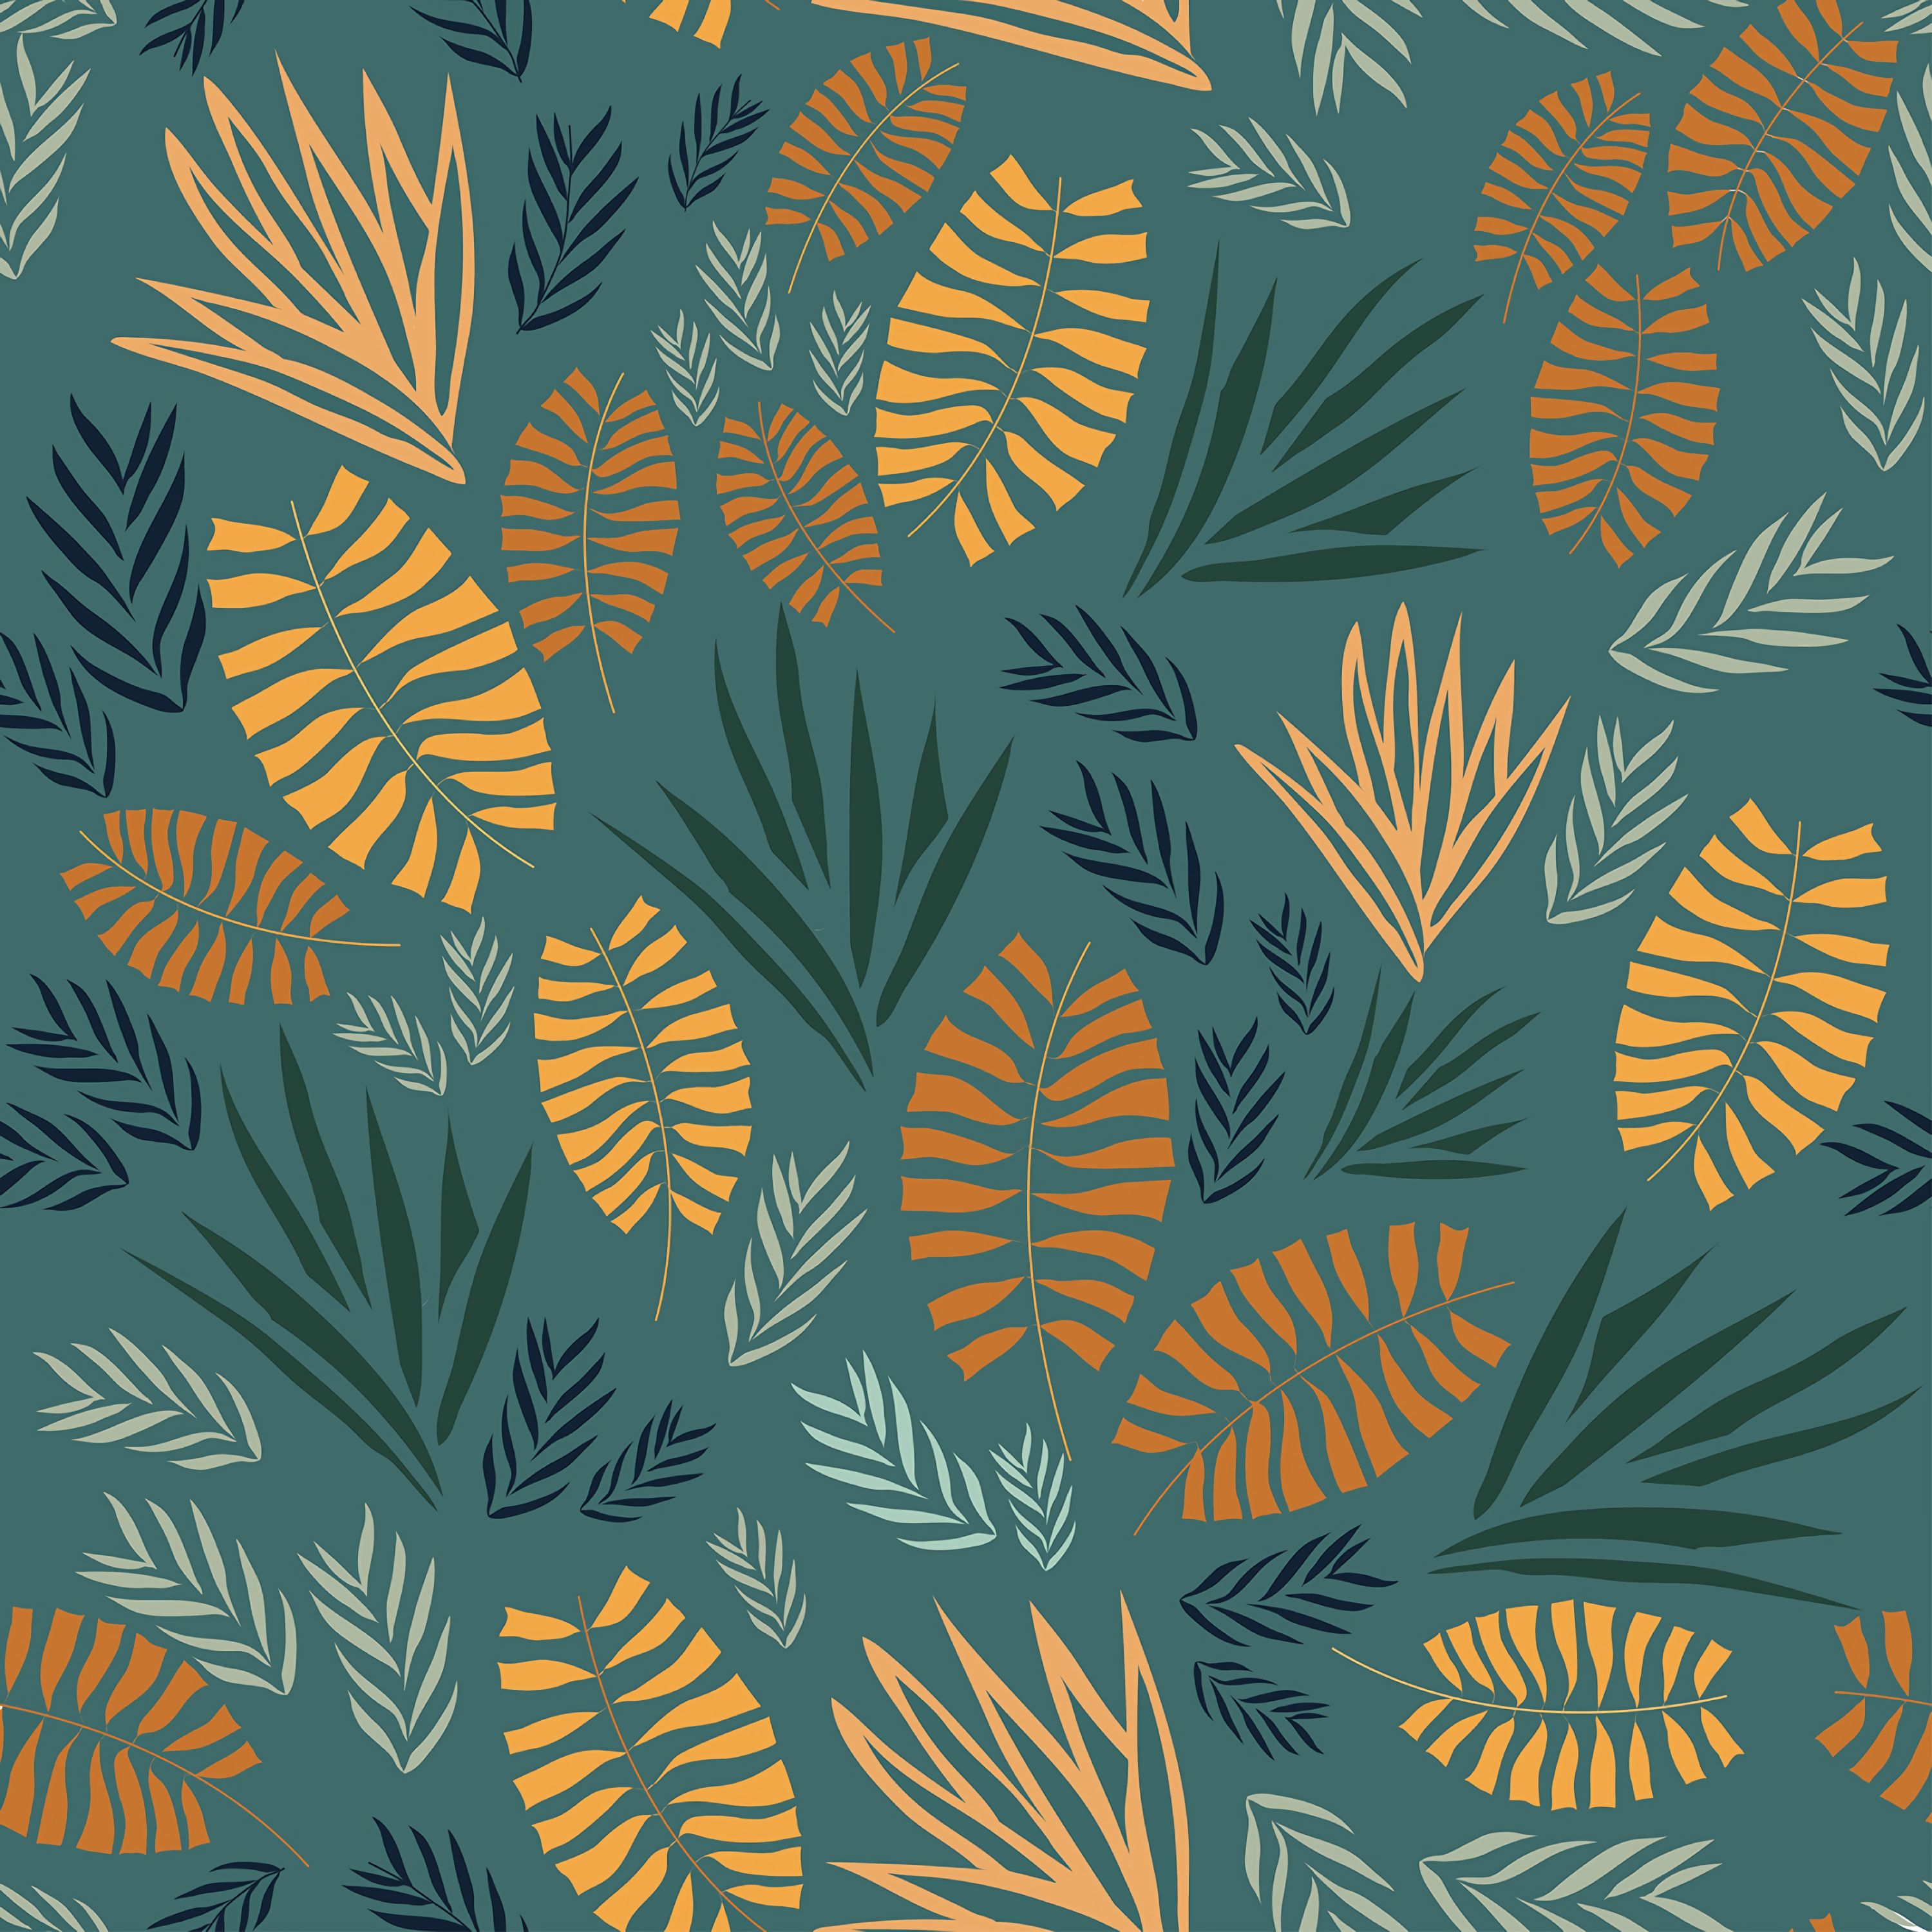 patterns, texture, textures, leaves, plants, pattern